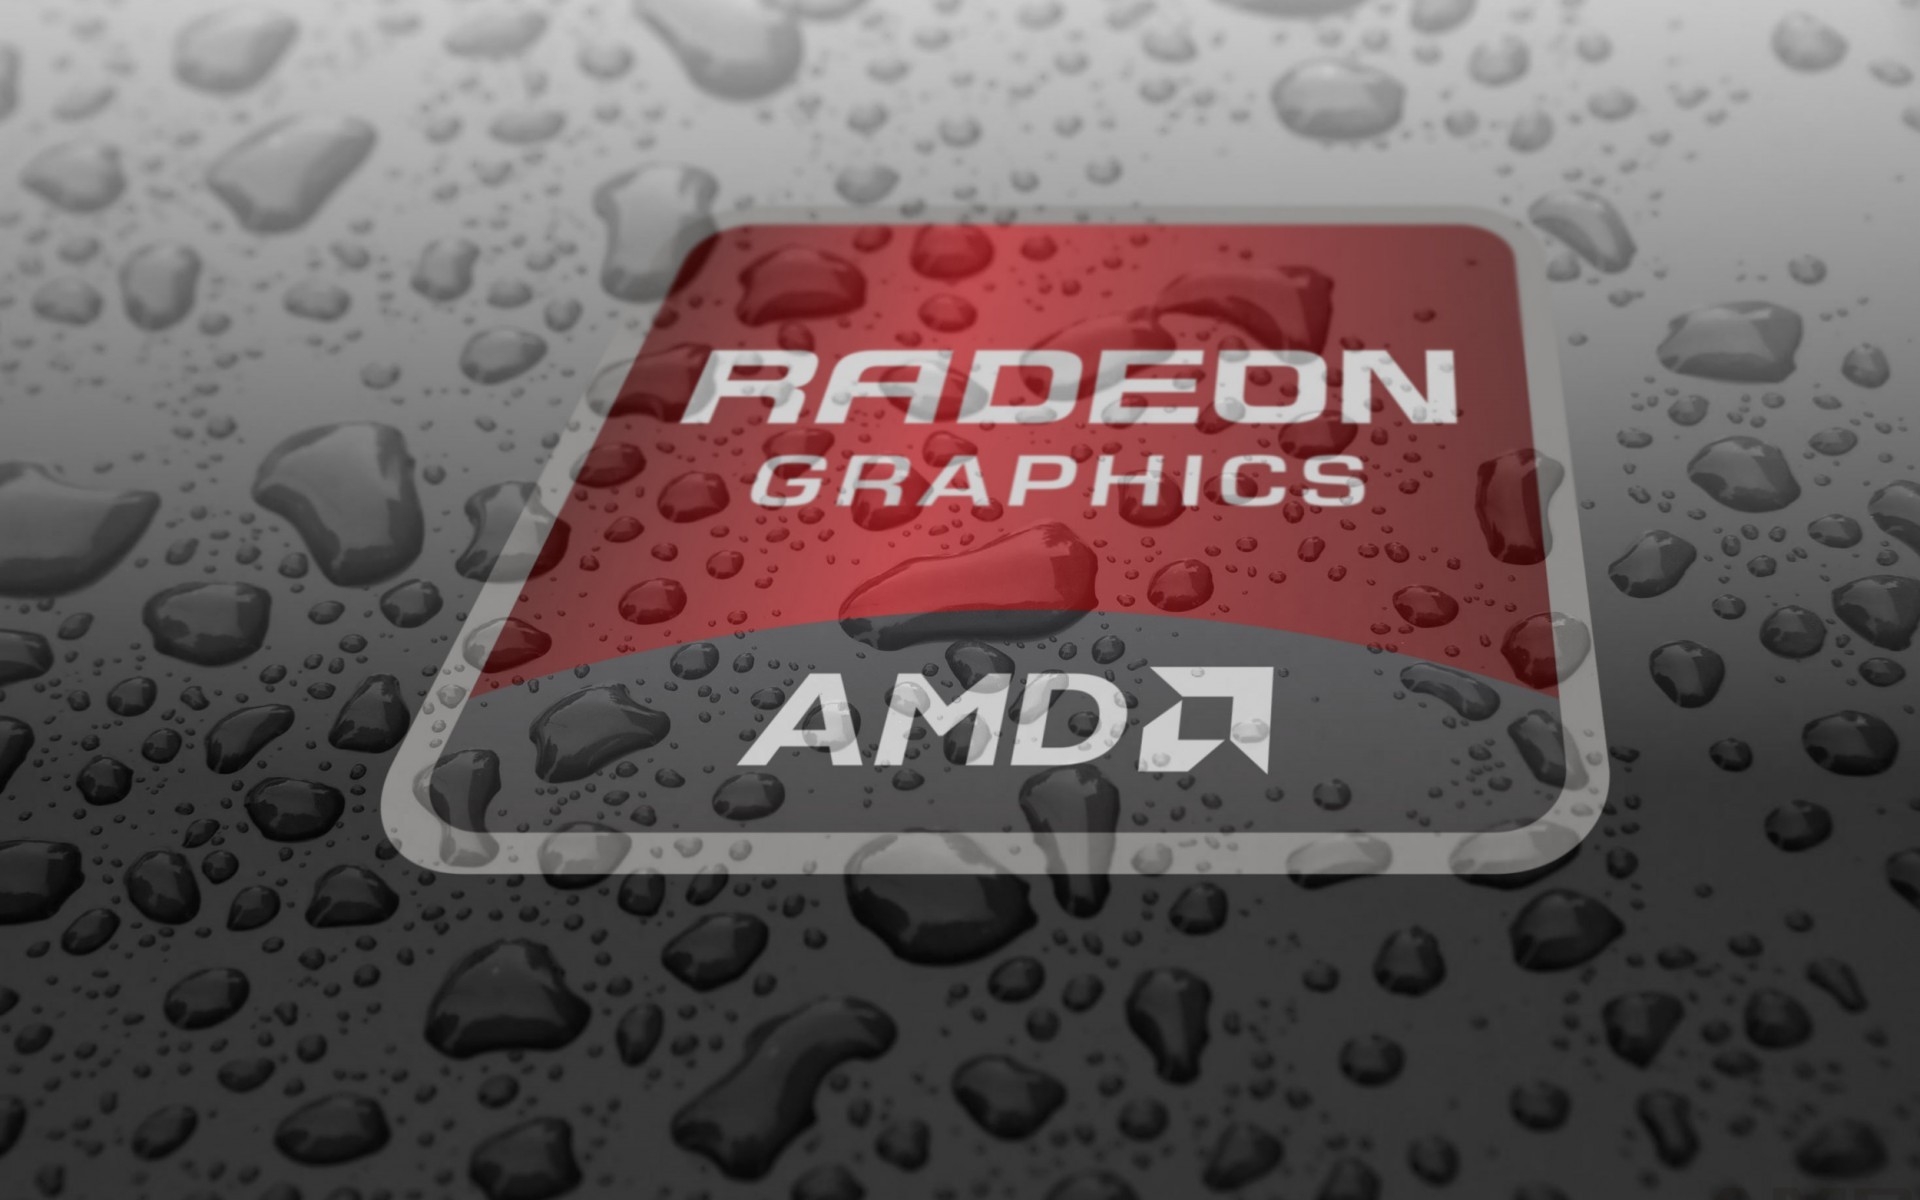 Radeon Graphics AMD for 1920 x 1200 widescreen resolution